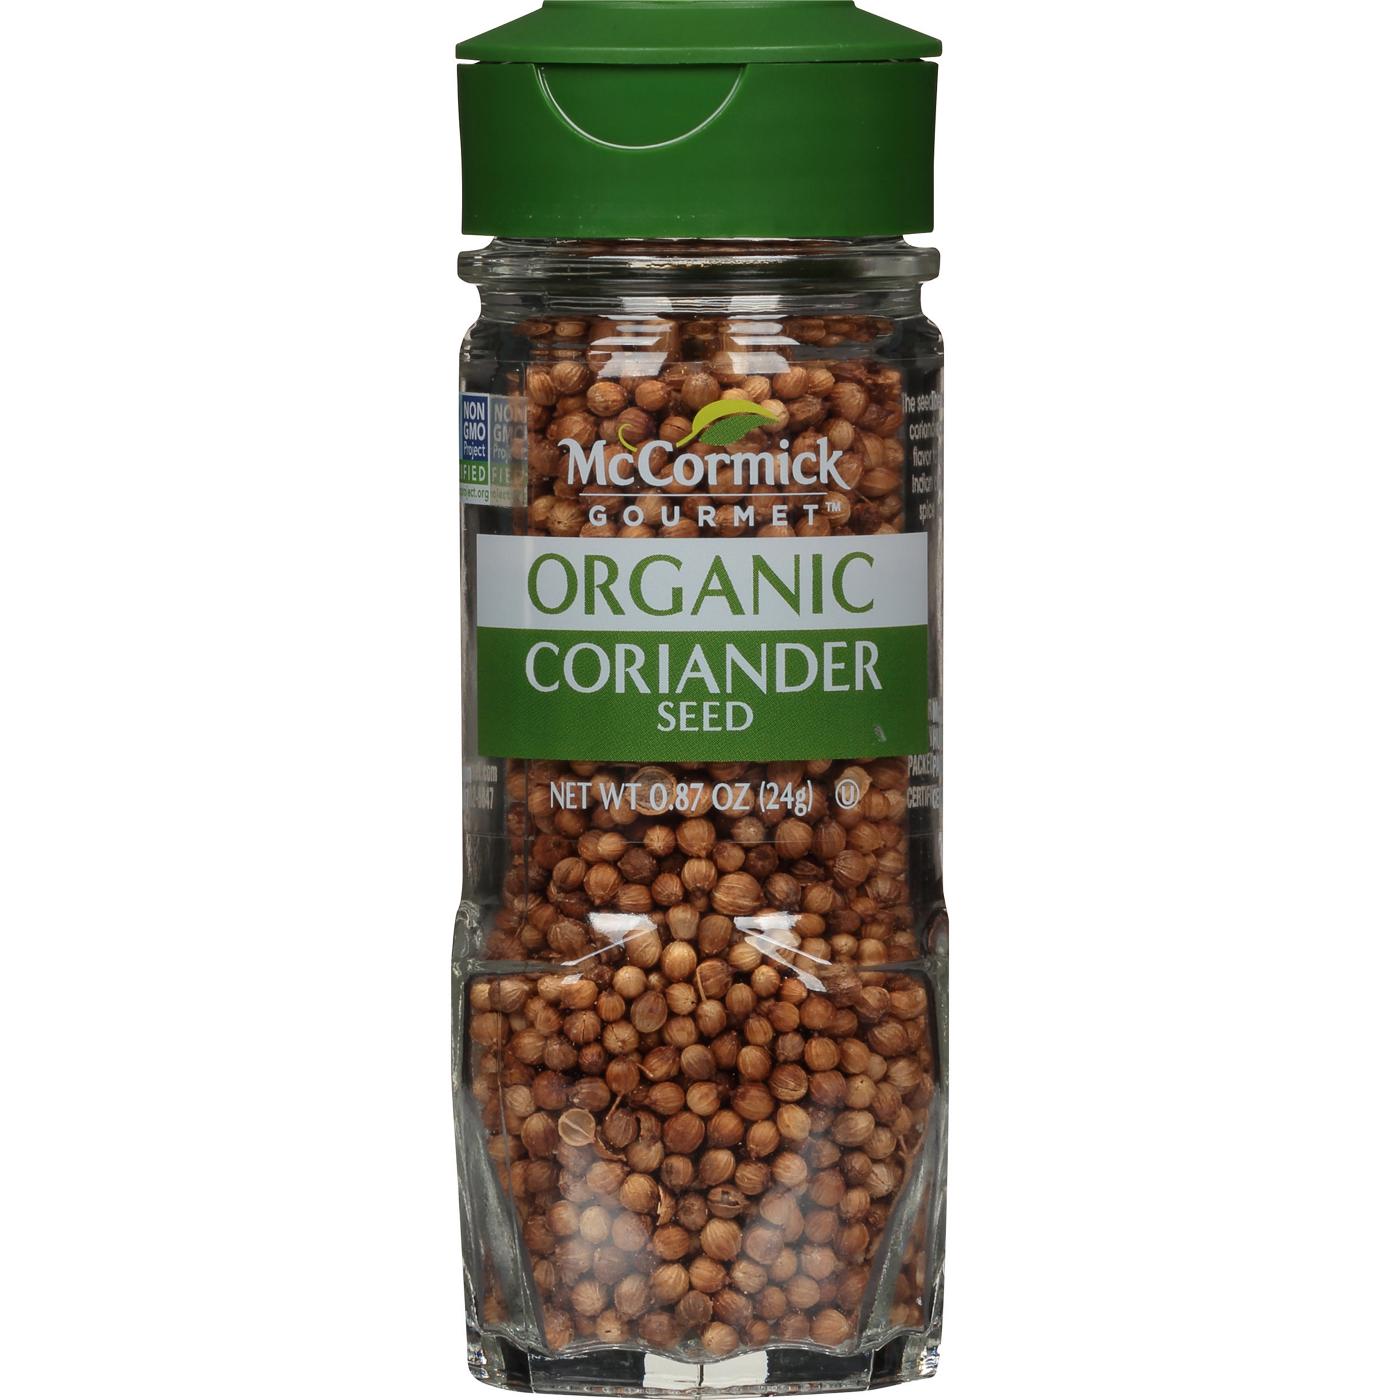 McCormick Gourmet Organic Coriander Seed; image 1 of 7